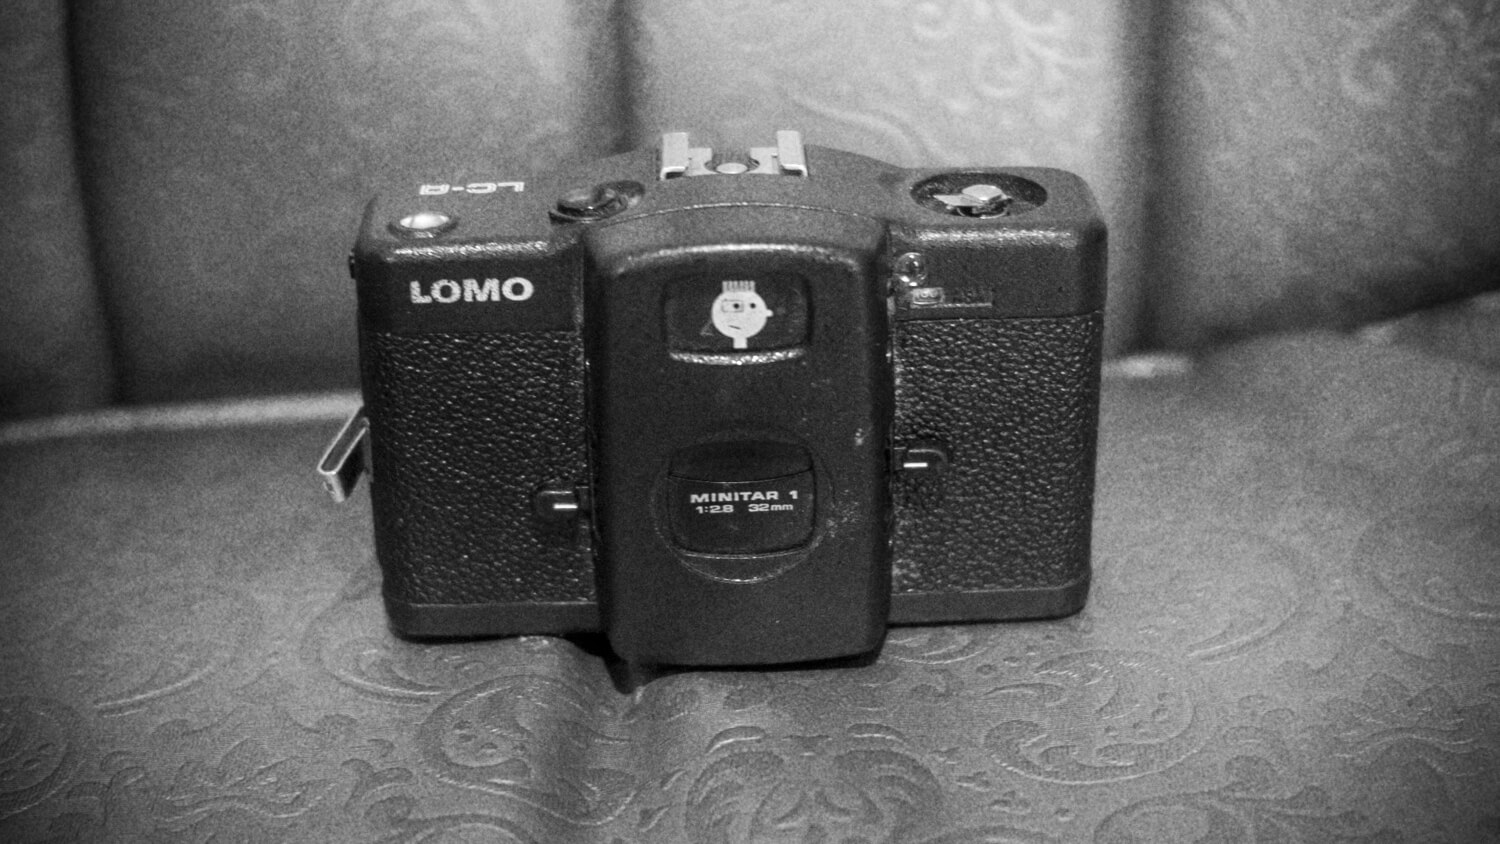 My Lomo LC-A and Lomo Minitar 1 32mm f/2.8, Matt Andrews